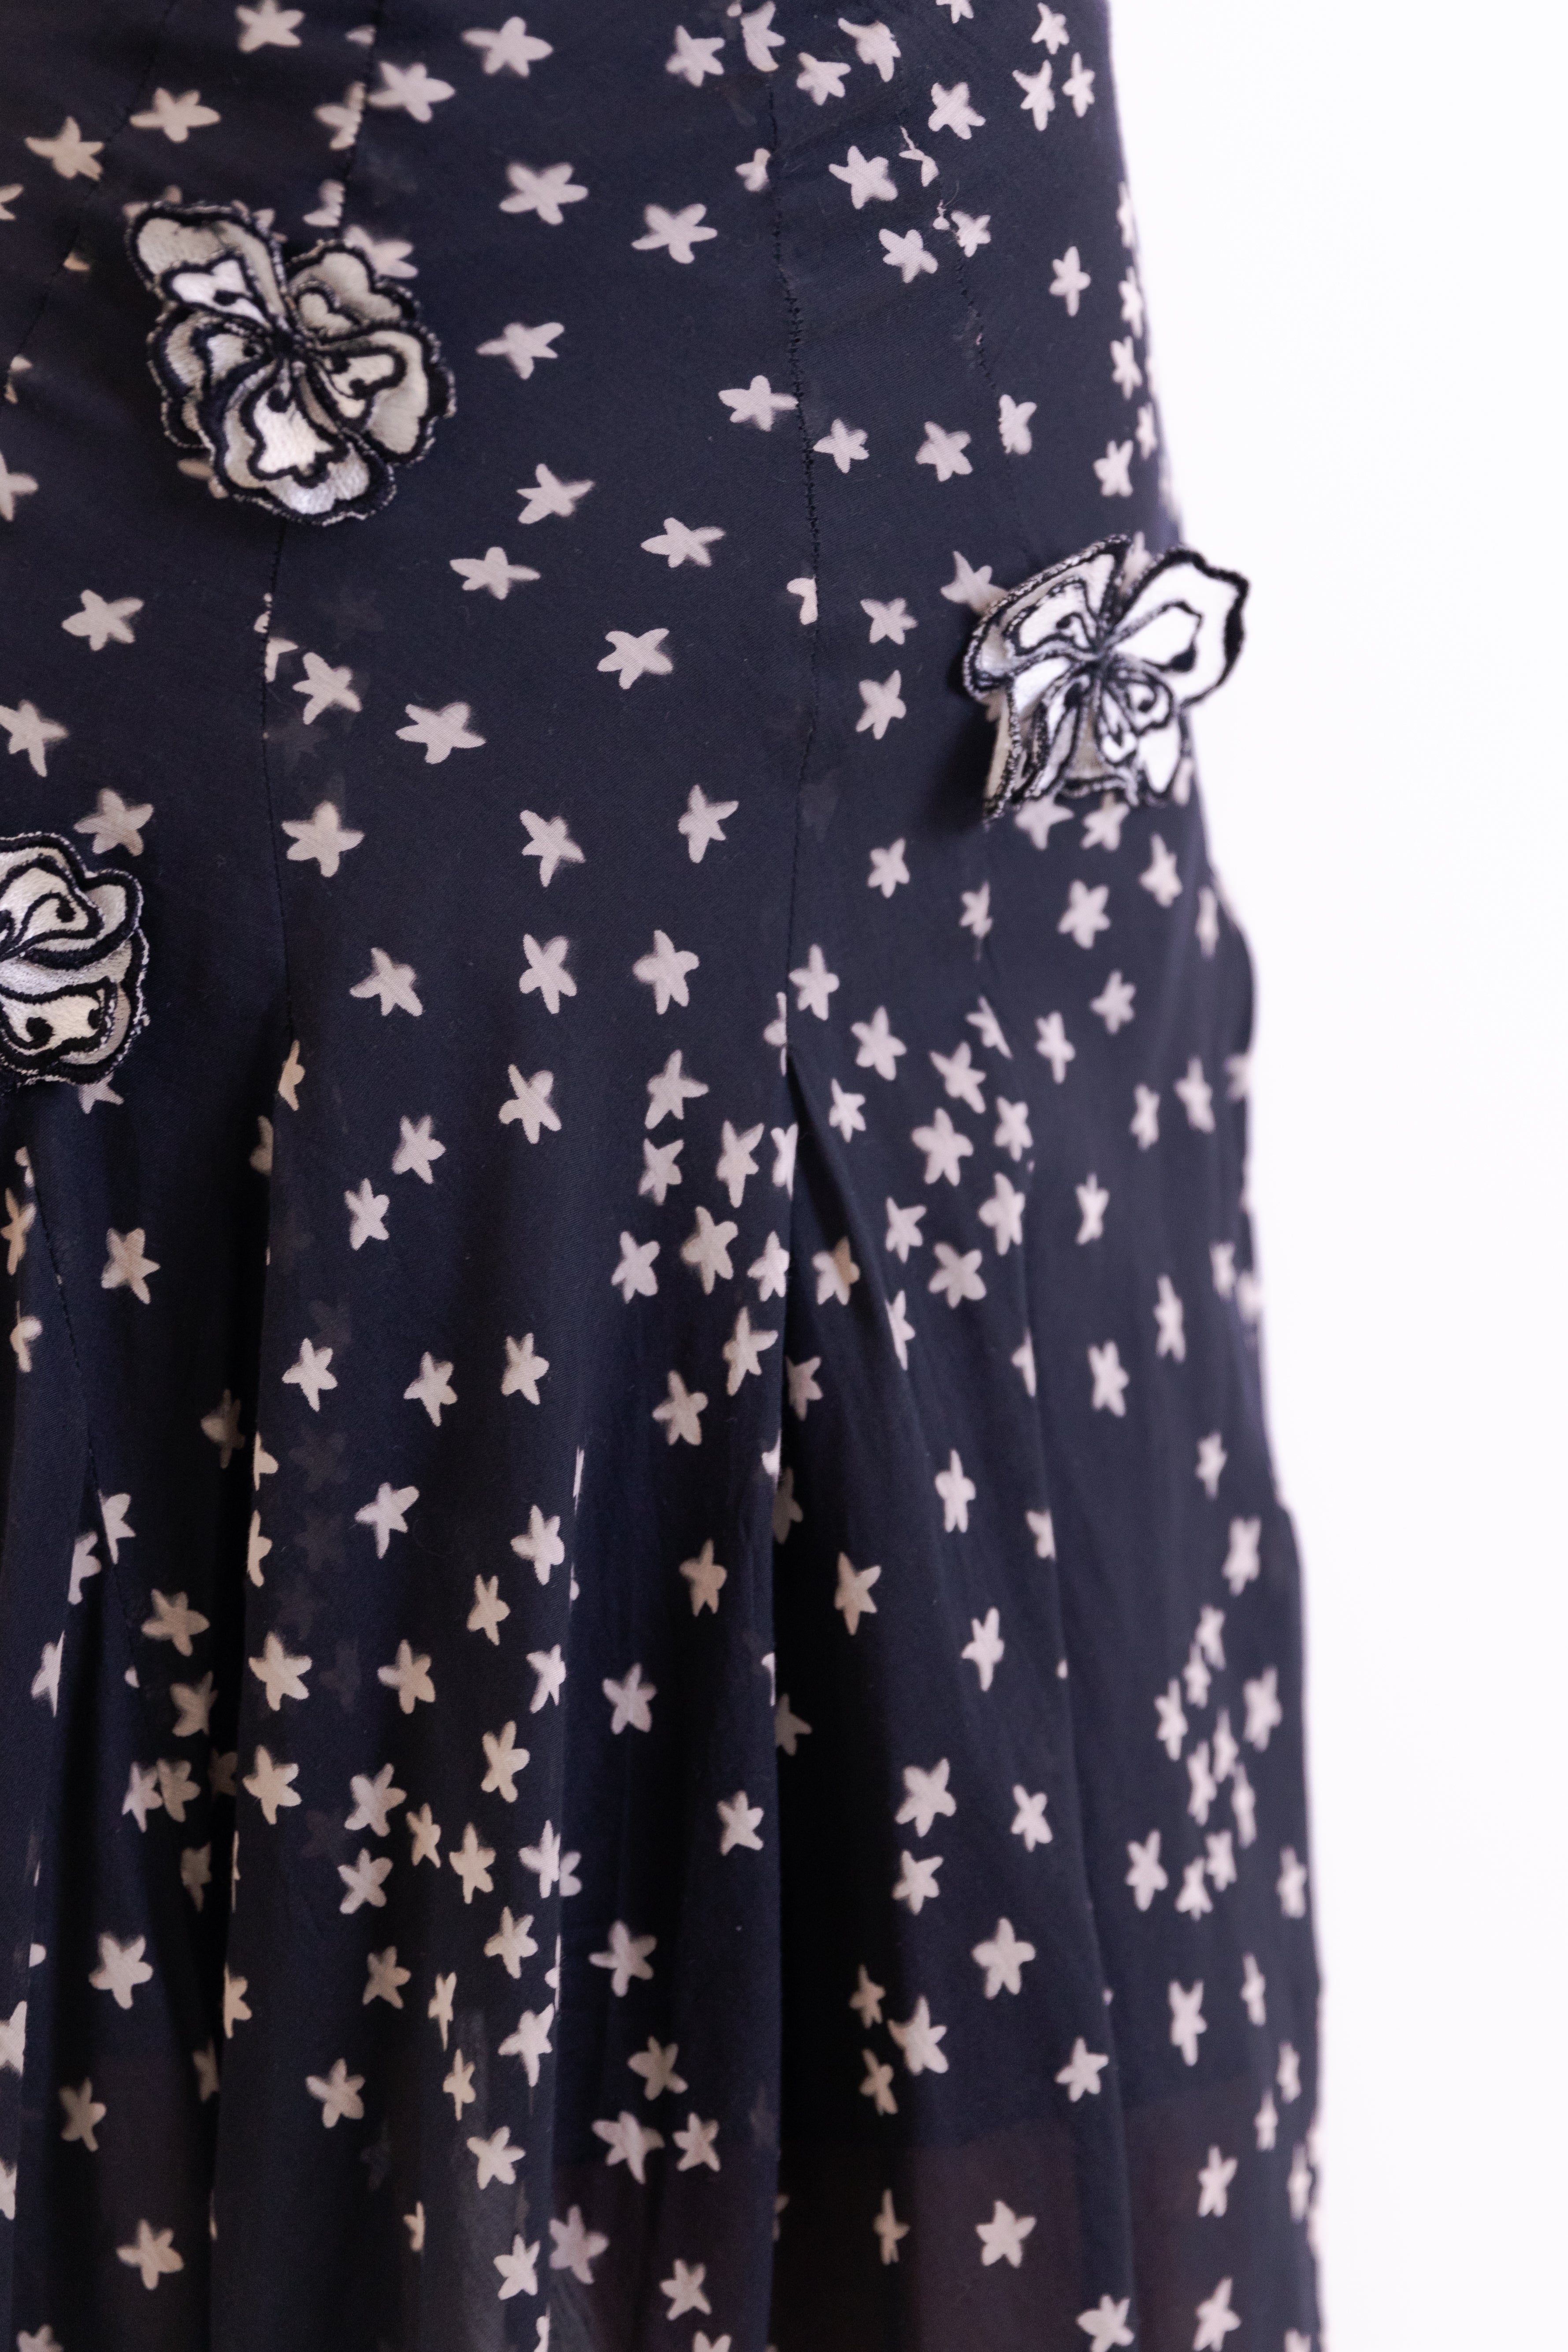 Lolita Lempicka <br> 90's 3D floral appliqué flowy star print skirt